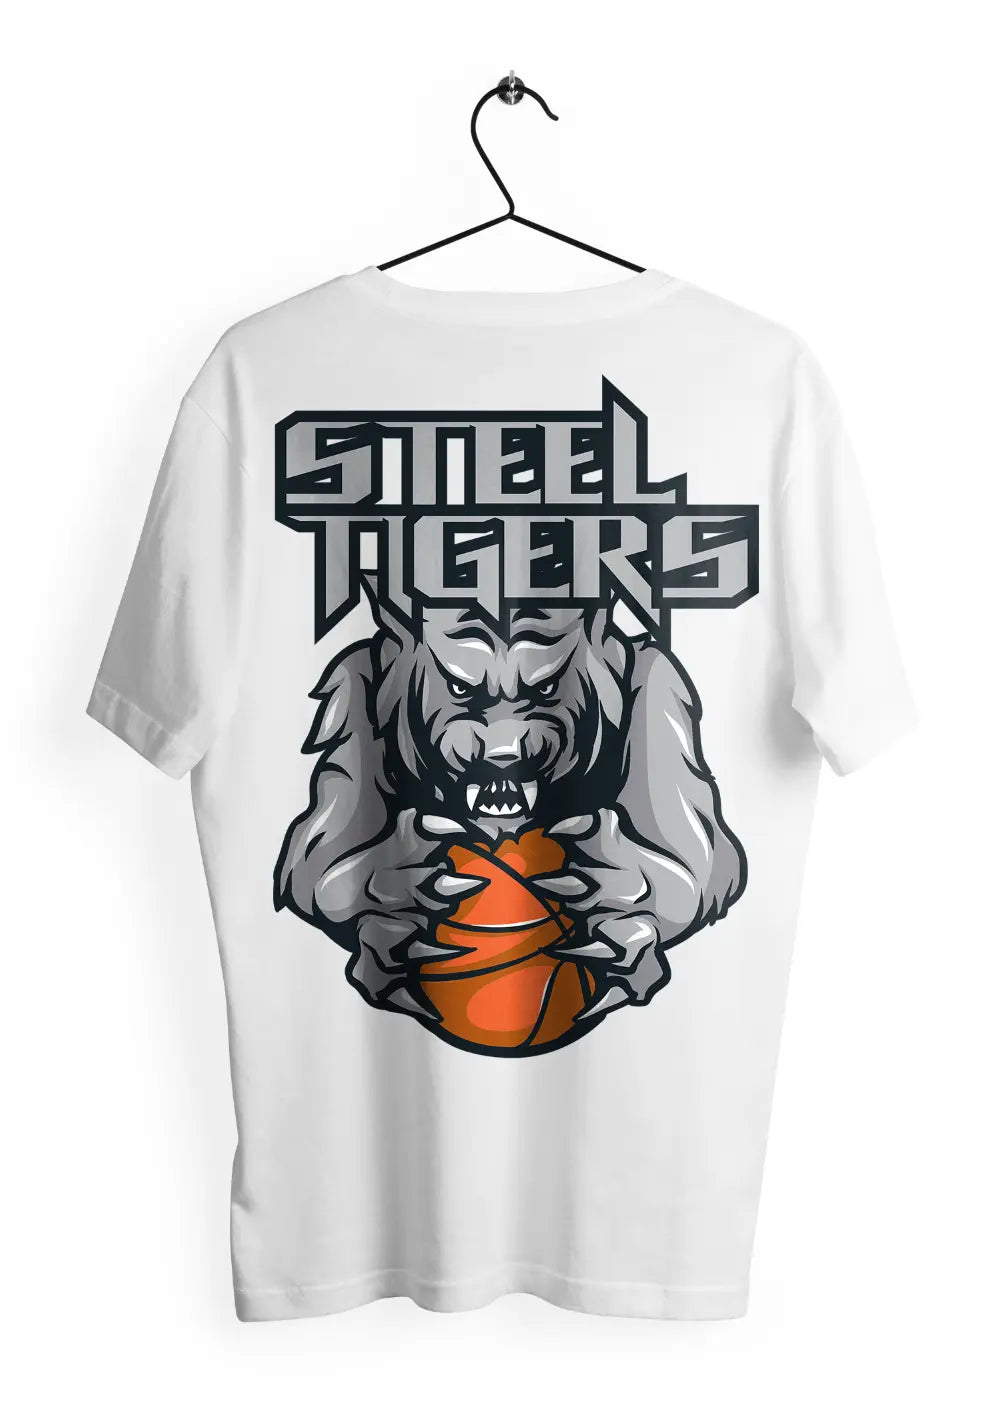 T-Shirt Maglietta Steel Tigers Urban Style Unisex T-Shirt CmrDesignStore Retro XS 